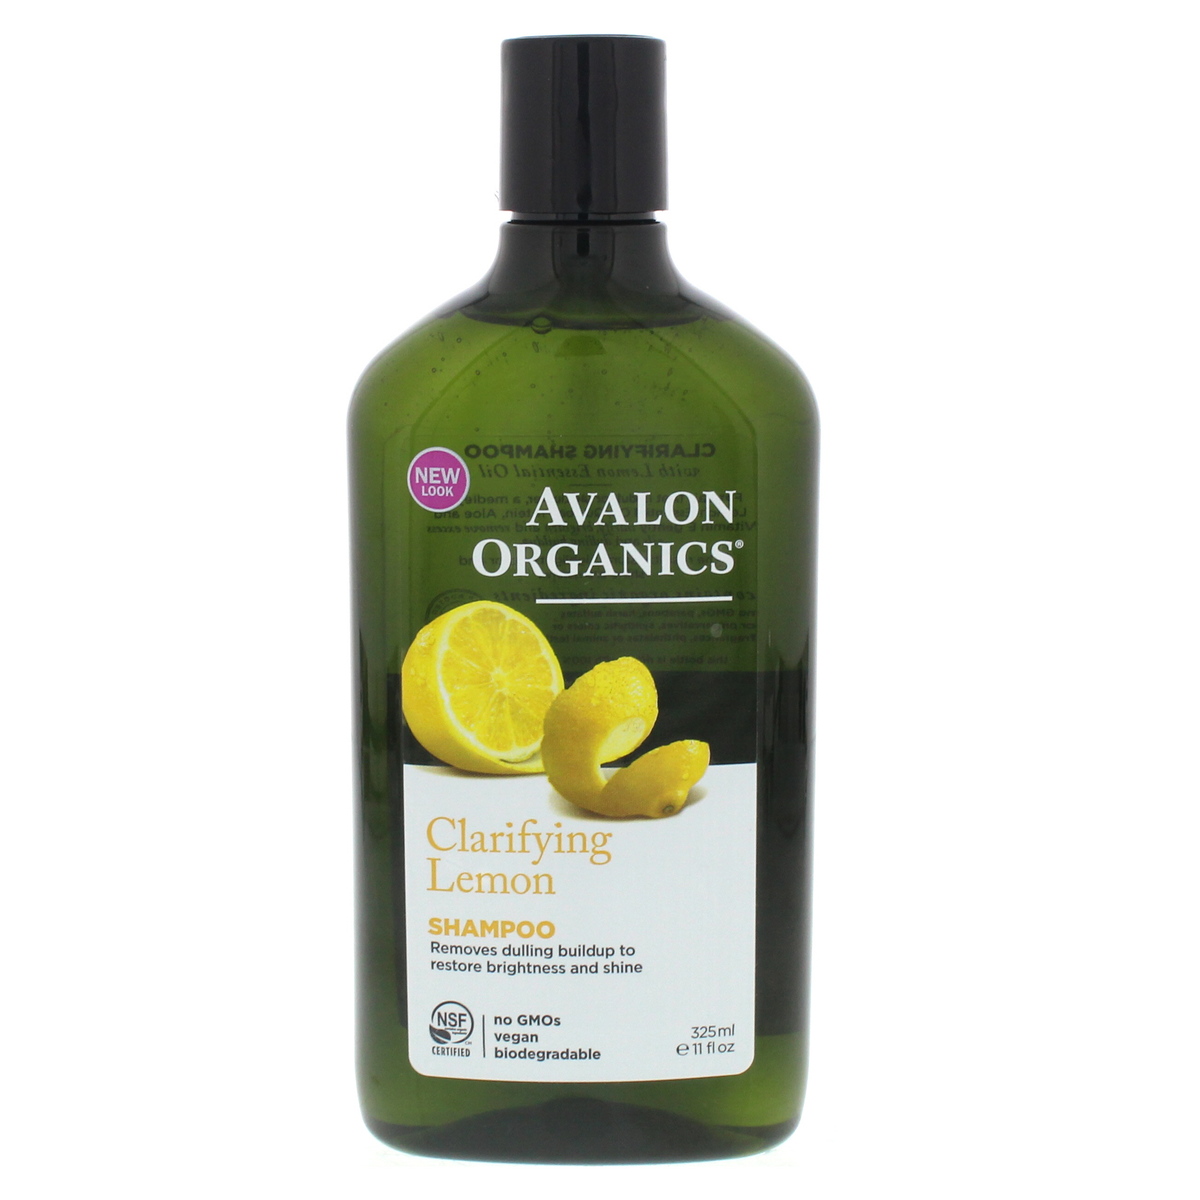 Avalon s Clarifying Lemon Shampoo 325ml